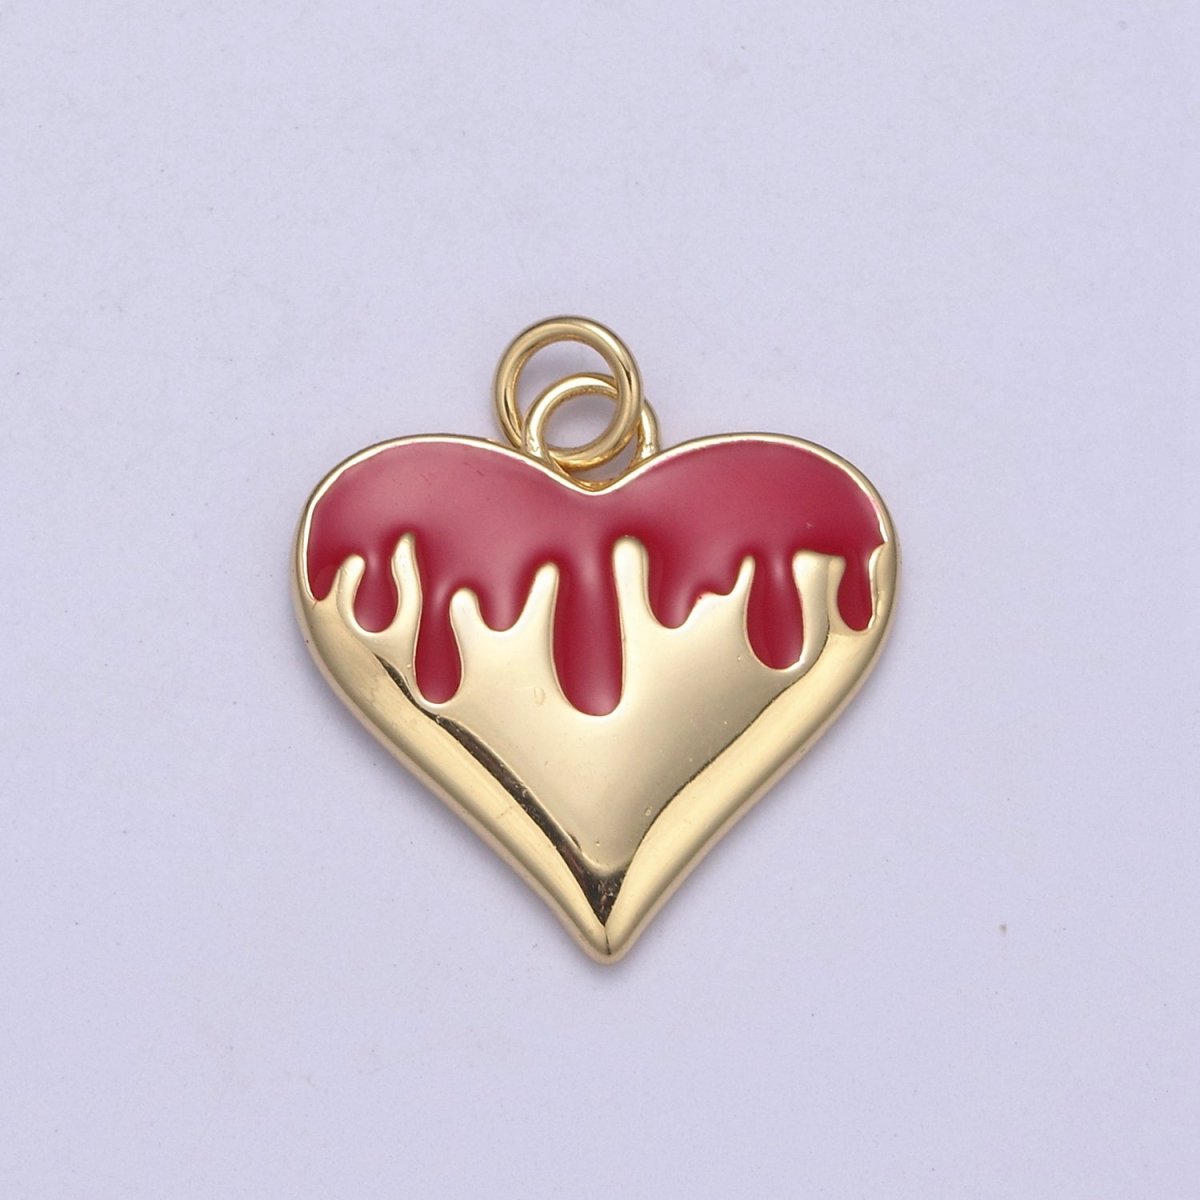 14k Gold Filled Broken Heart Charm Dripping Blood Red Black White Enamel Love for Valentine Jewelry Making N-347 - N-349 - DLUXCA